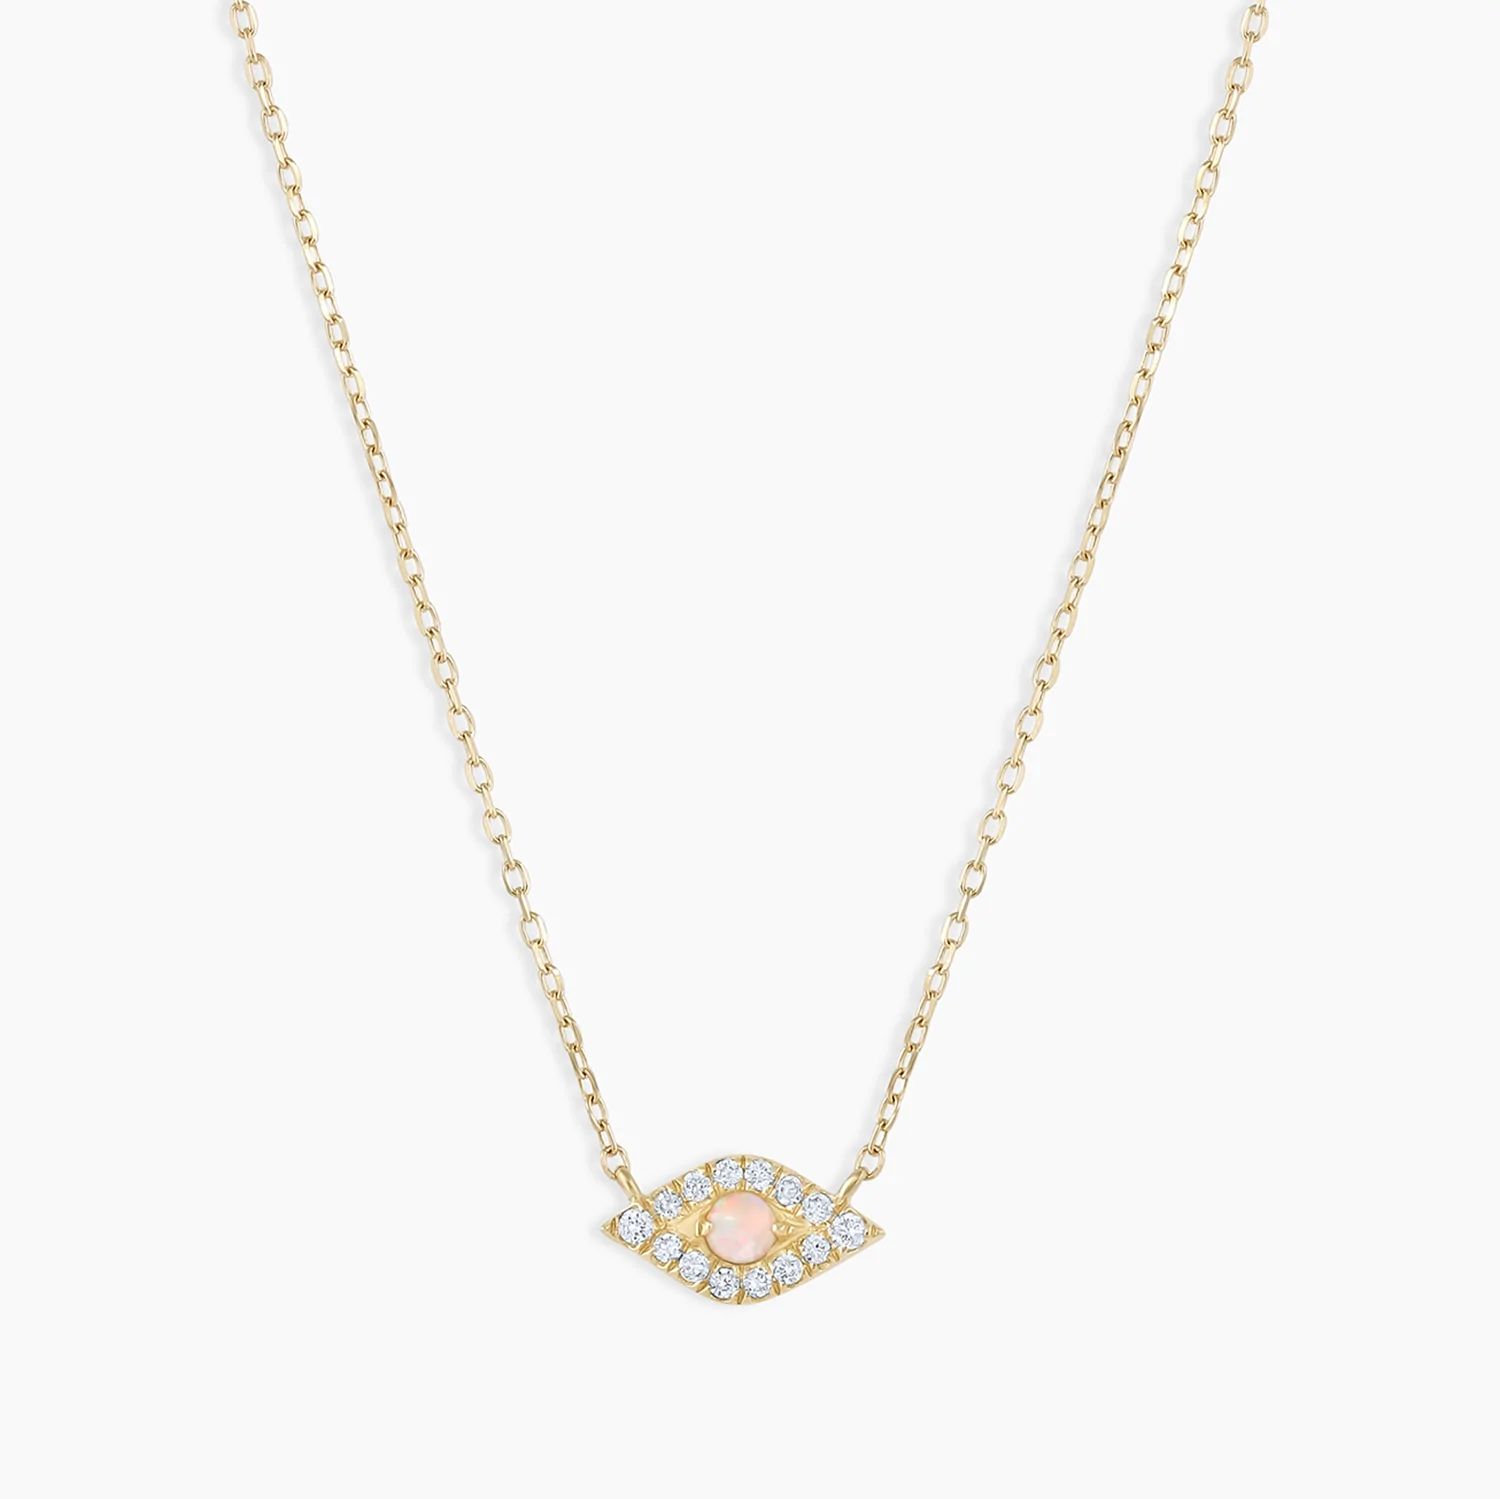 Diamond Evil Eye Necklace in 14k Gold, Women's by gorjana | Gorjana